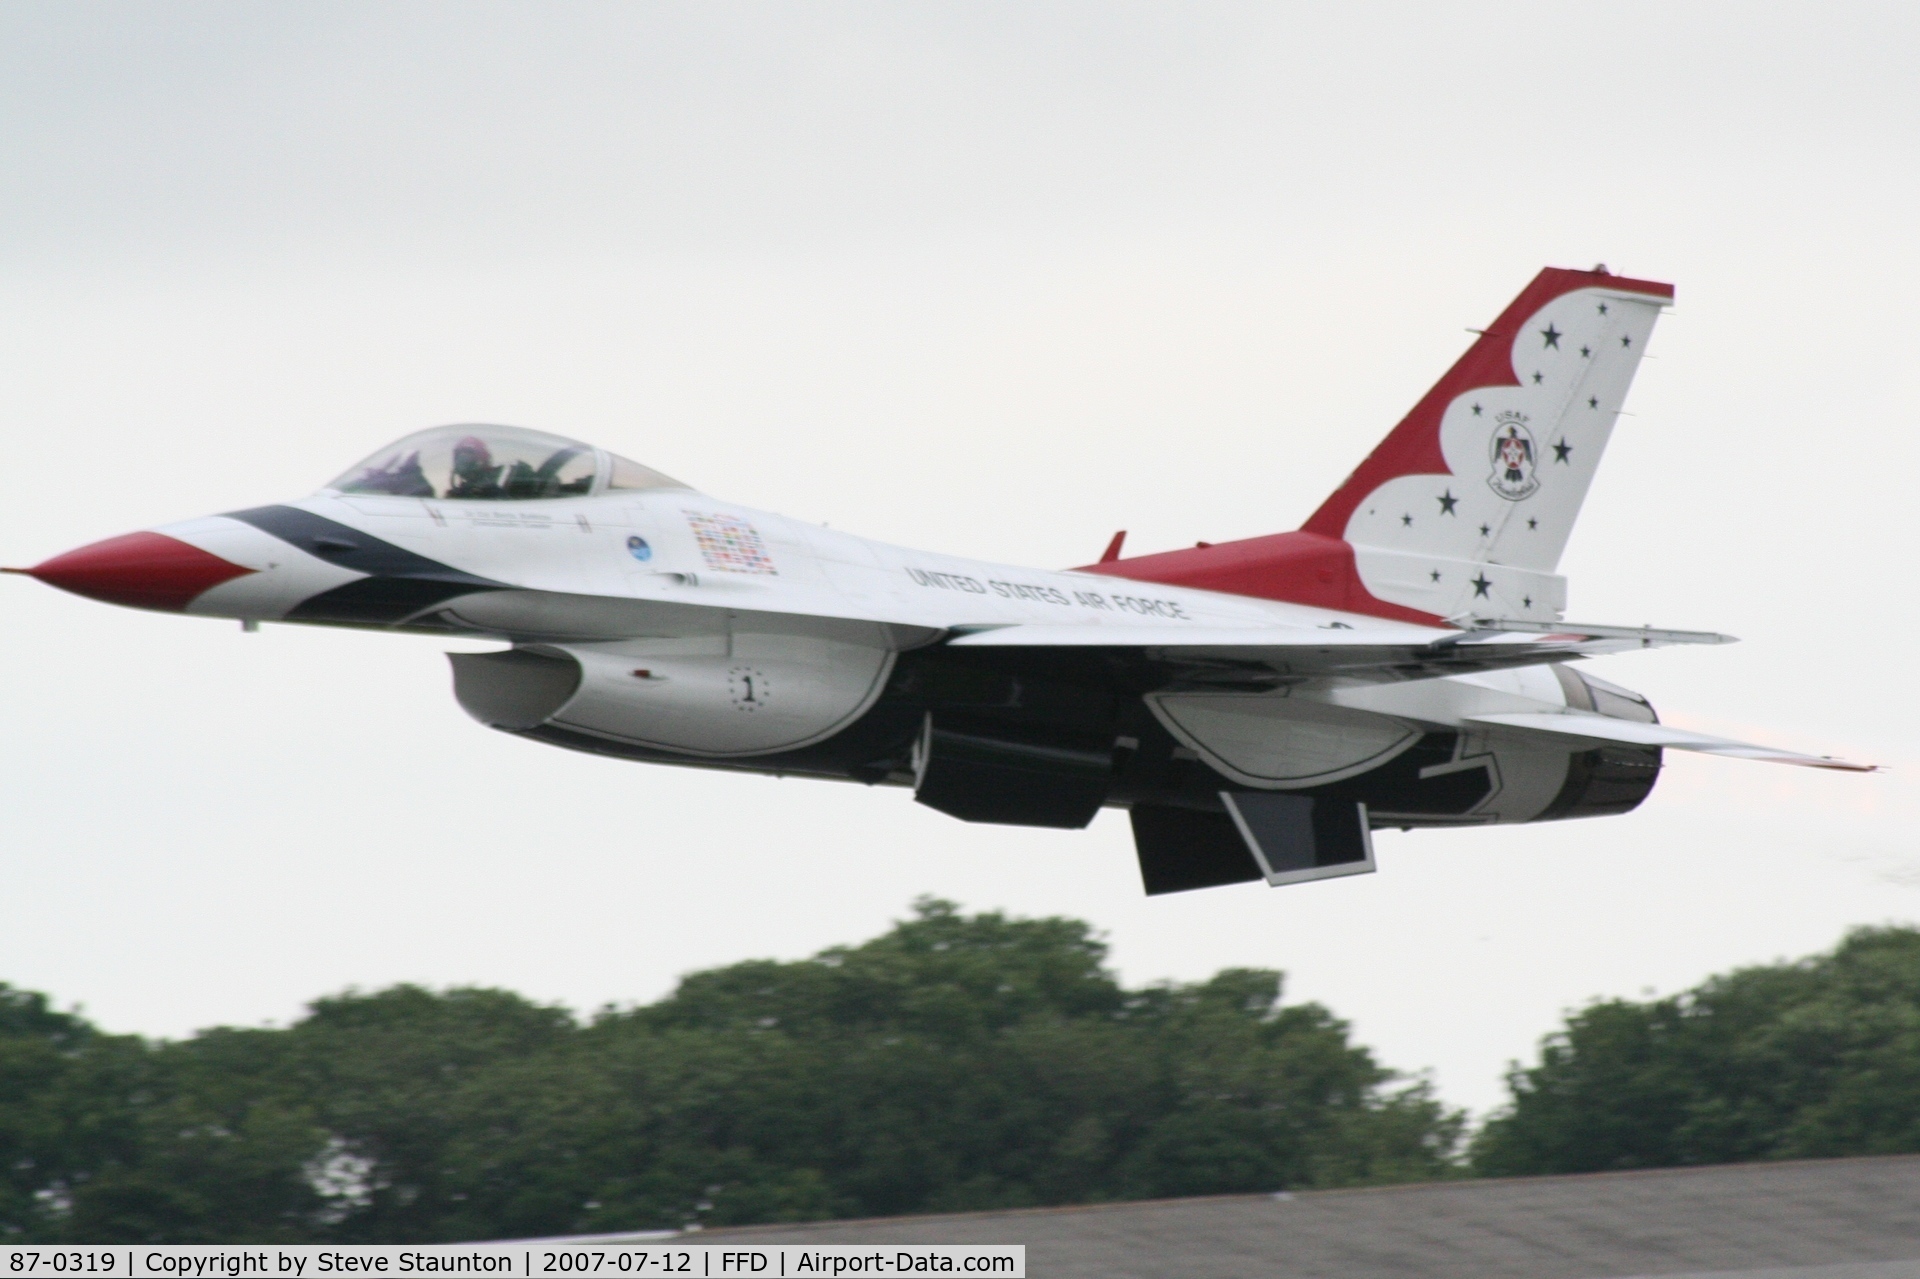 87-0319, 1987 General Dynamics F-16C Fighting Falcon C/N 5C-580, Thunderbirds practice at Royal International Air Tattoo 2007